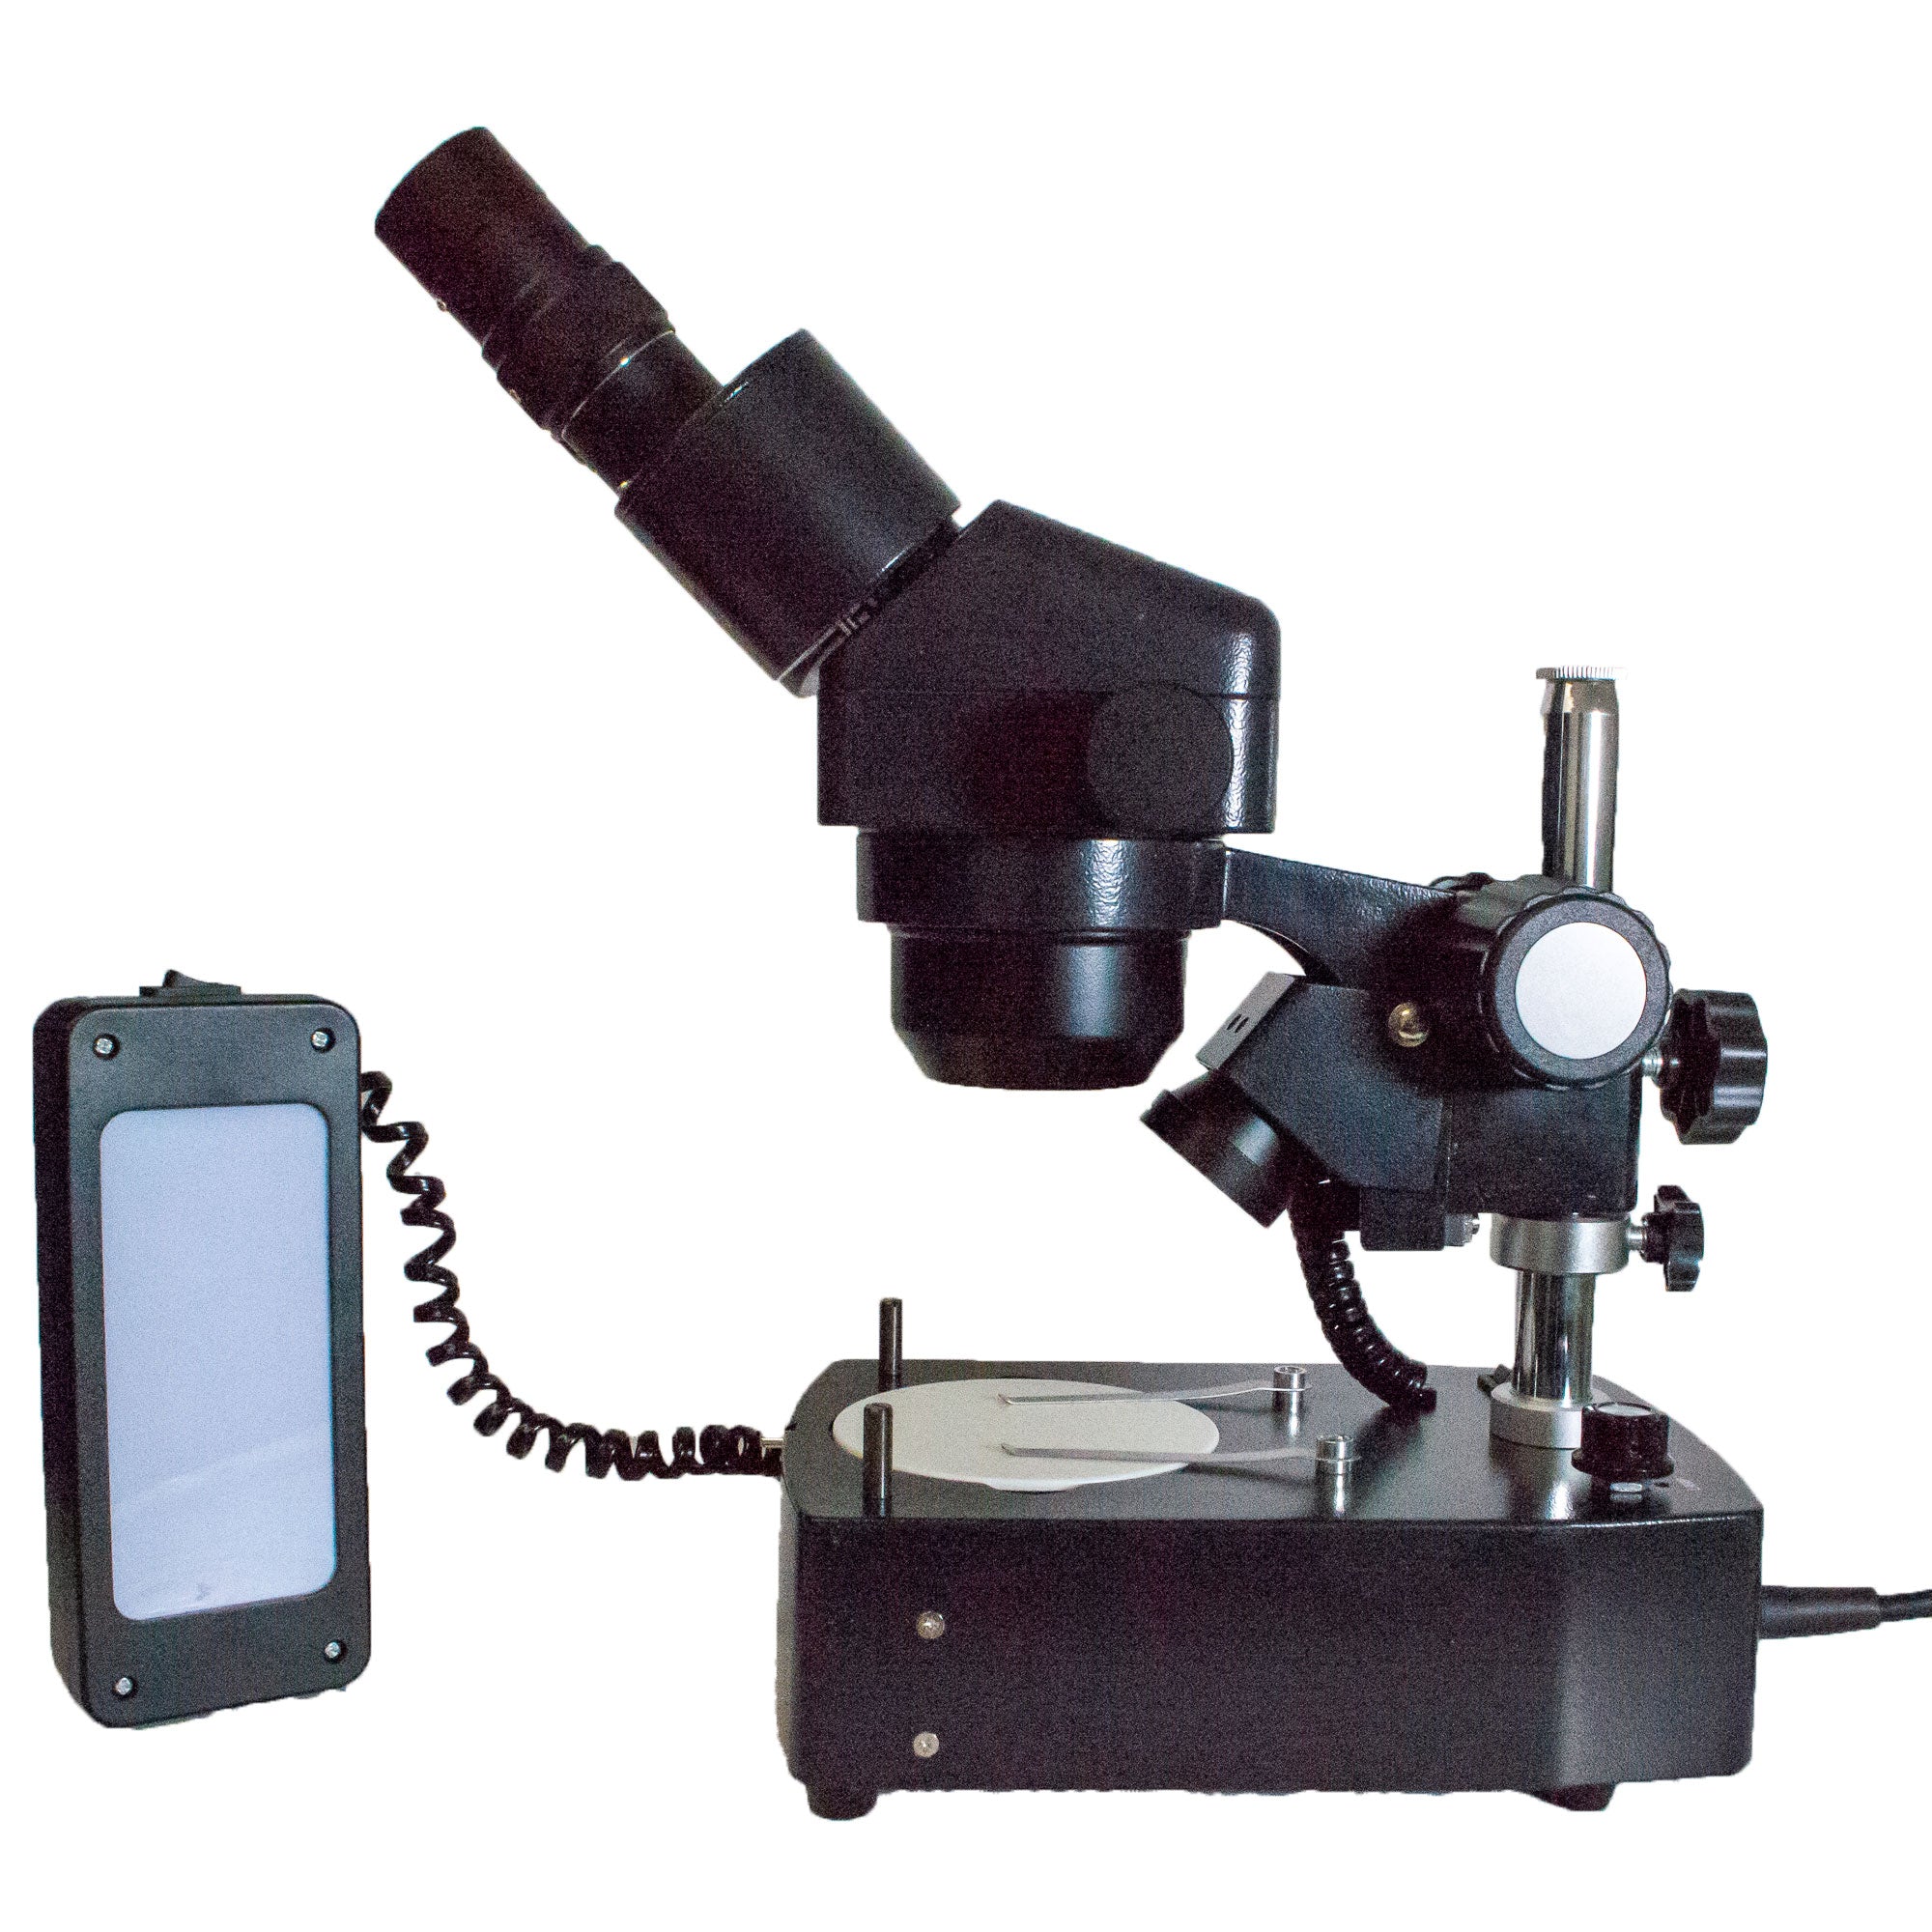 Gemmological microscope